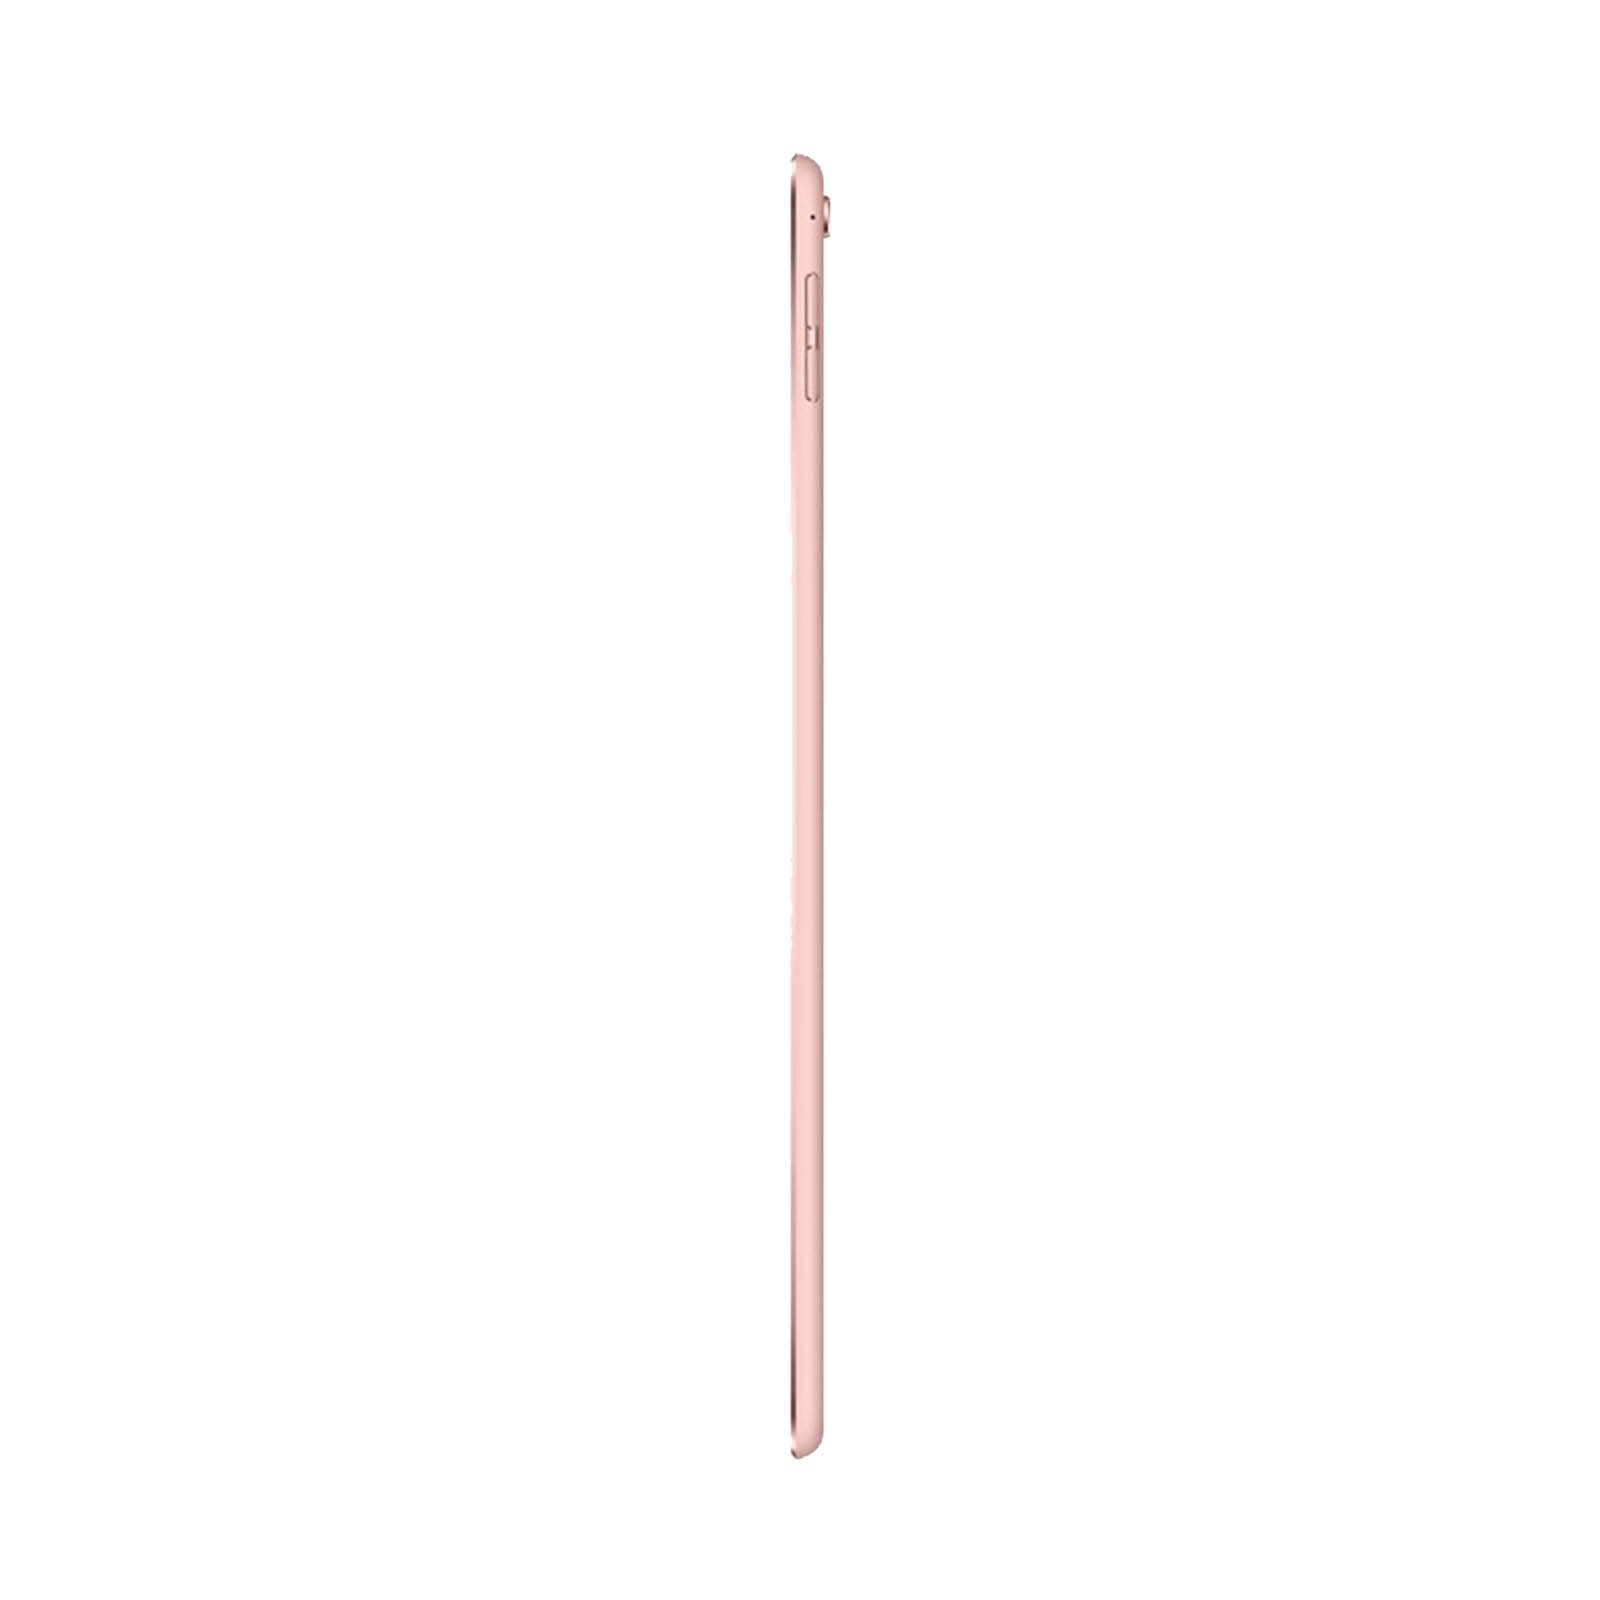 iPad Pro 9.7 Inch 128GB Rose Gold Very Good - Unlocked